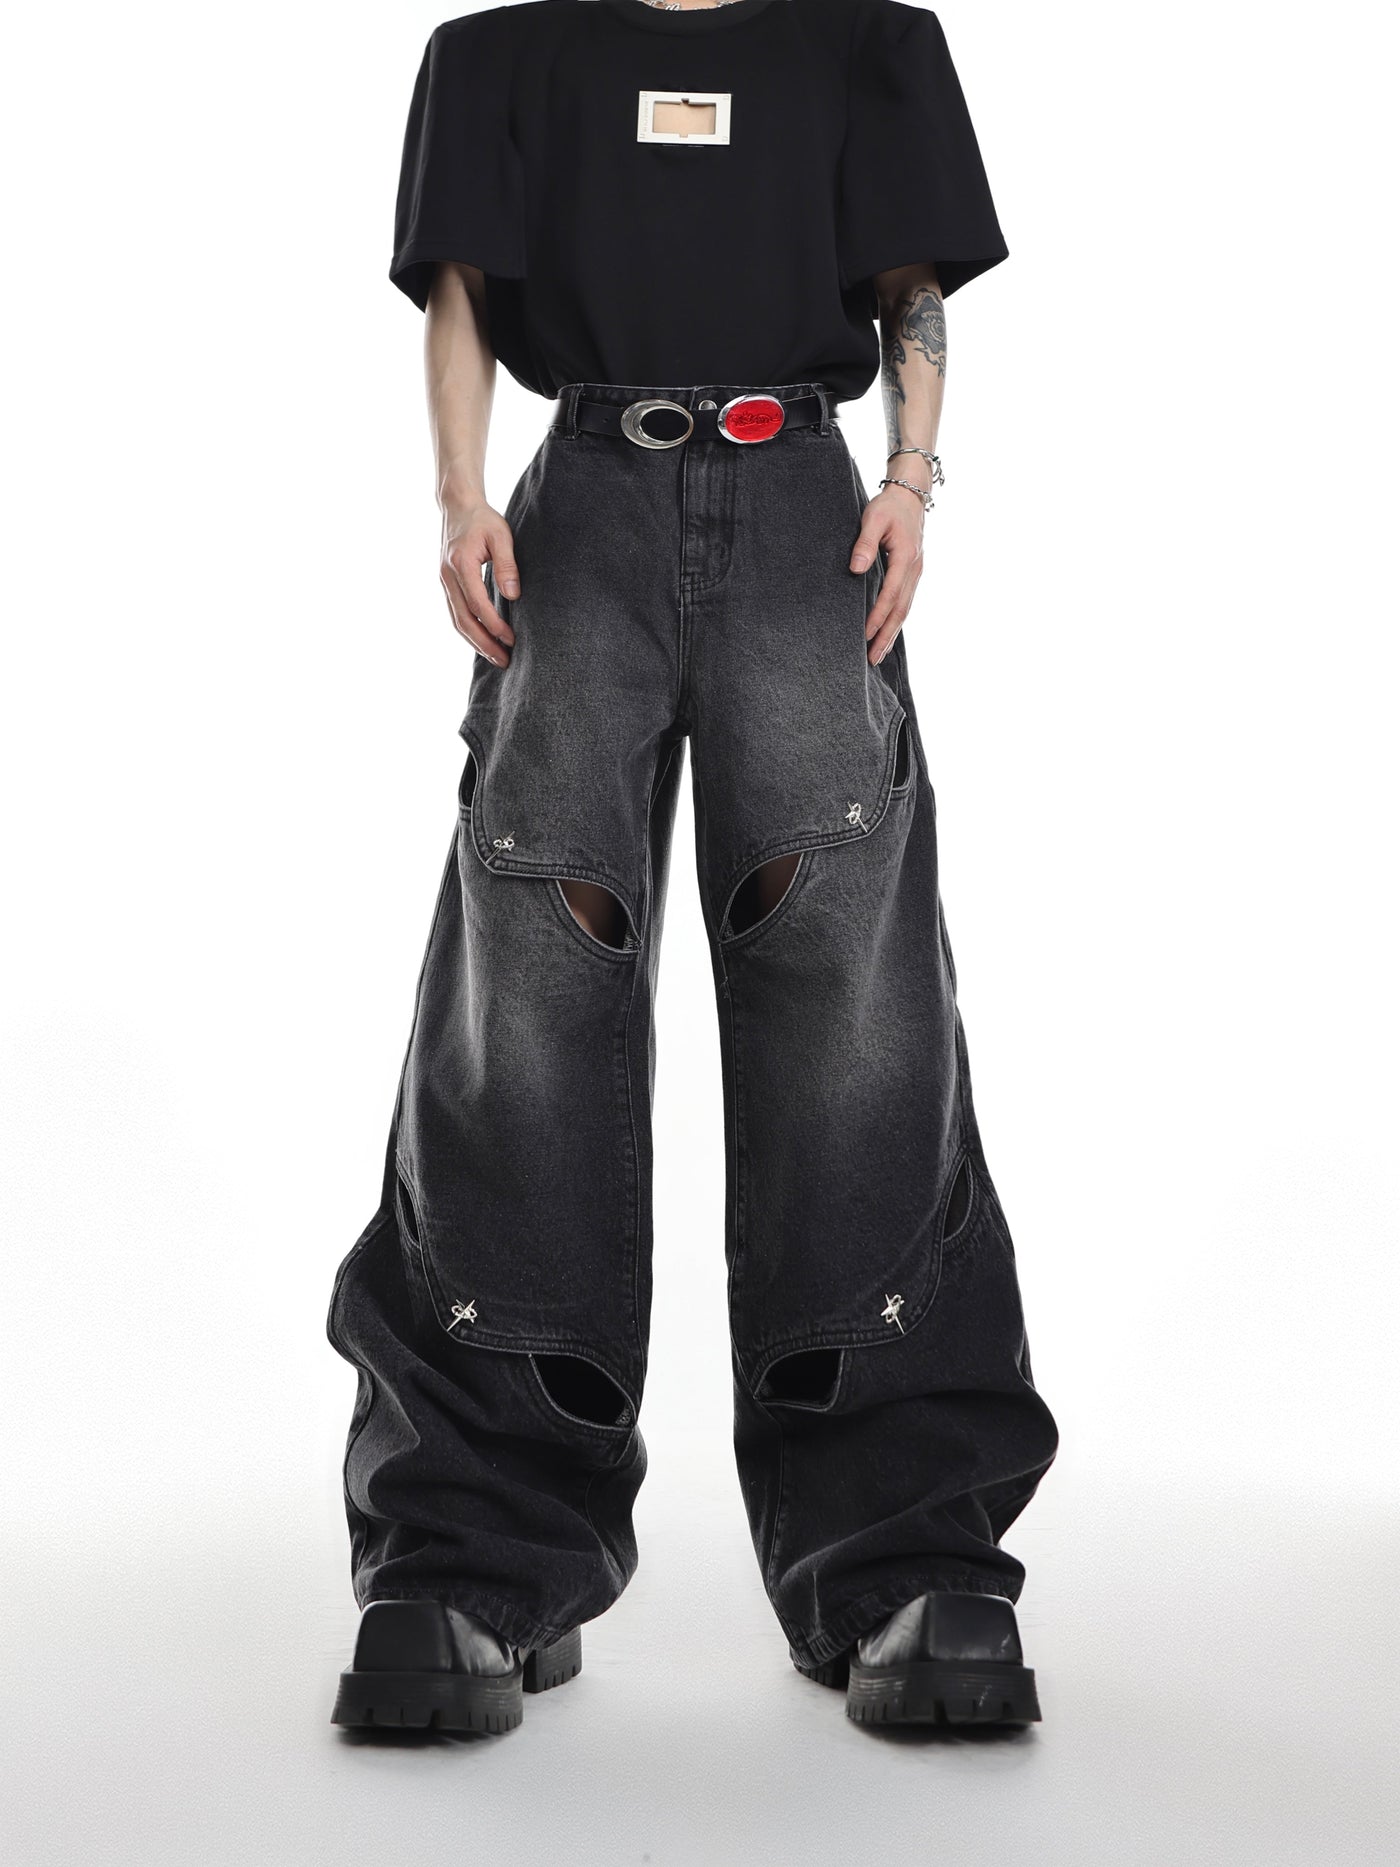 Argue Culture Washed Metal Buttoned Hollow Jeans Korean Street Fashion Jeans By Argue Culture Shop Online at OH Vault